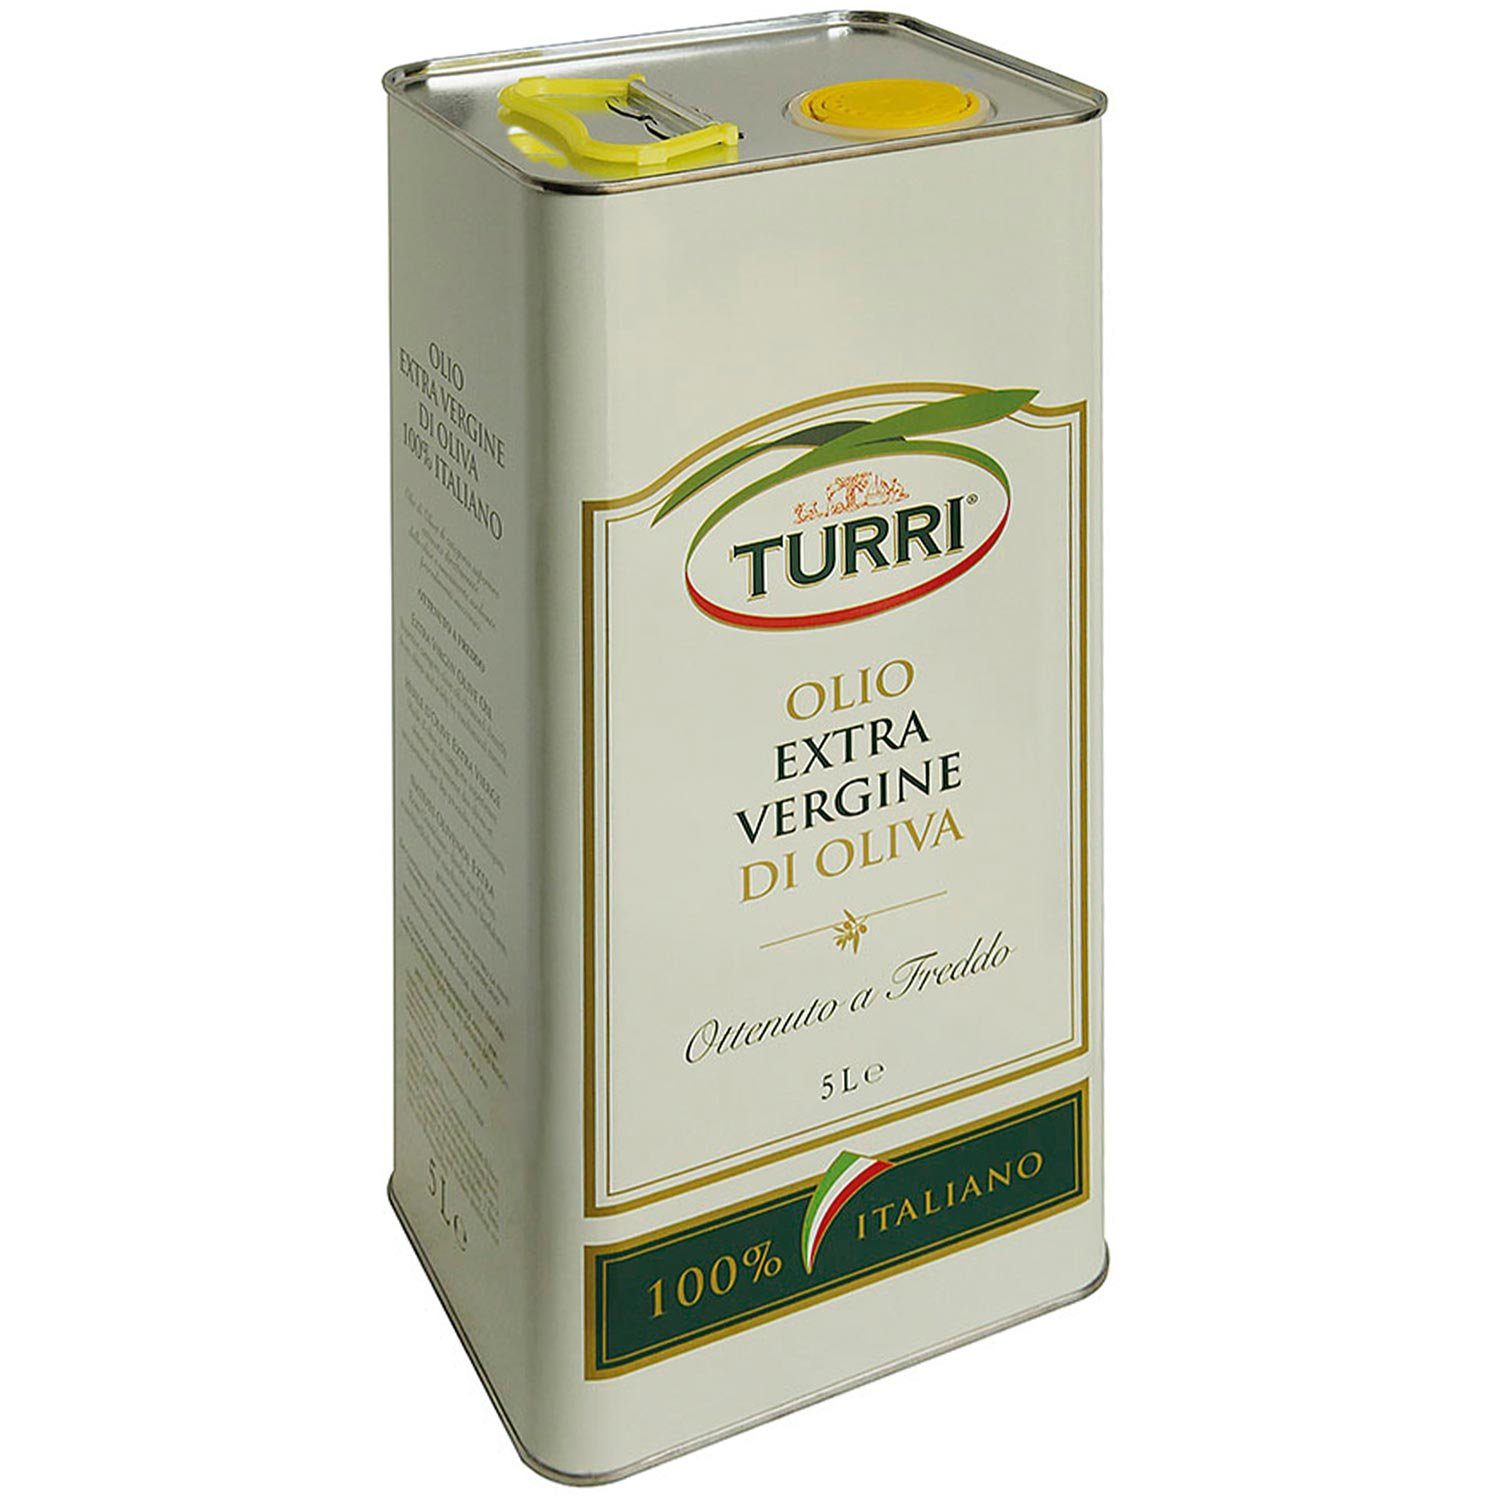 Landshop24 Gewürzregal Turri Olivenöl extra vergine, 5 Liter Kanister, 100% Original Italien, MHD: 20-12-2024 1-tlg., Speiseöl Italien Gardasee